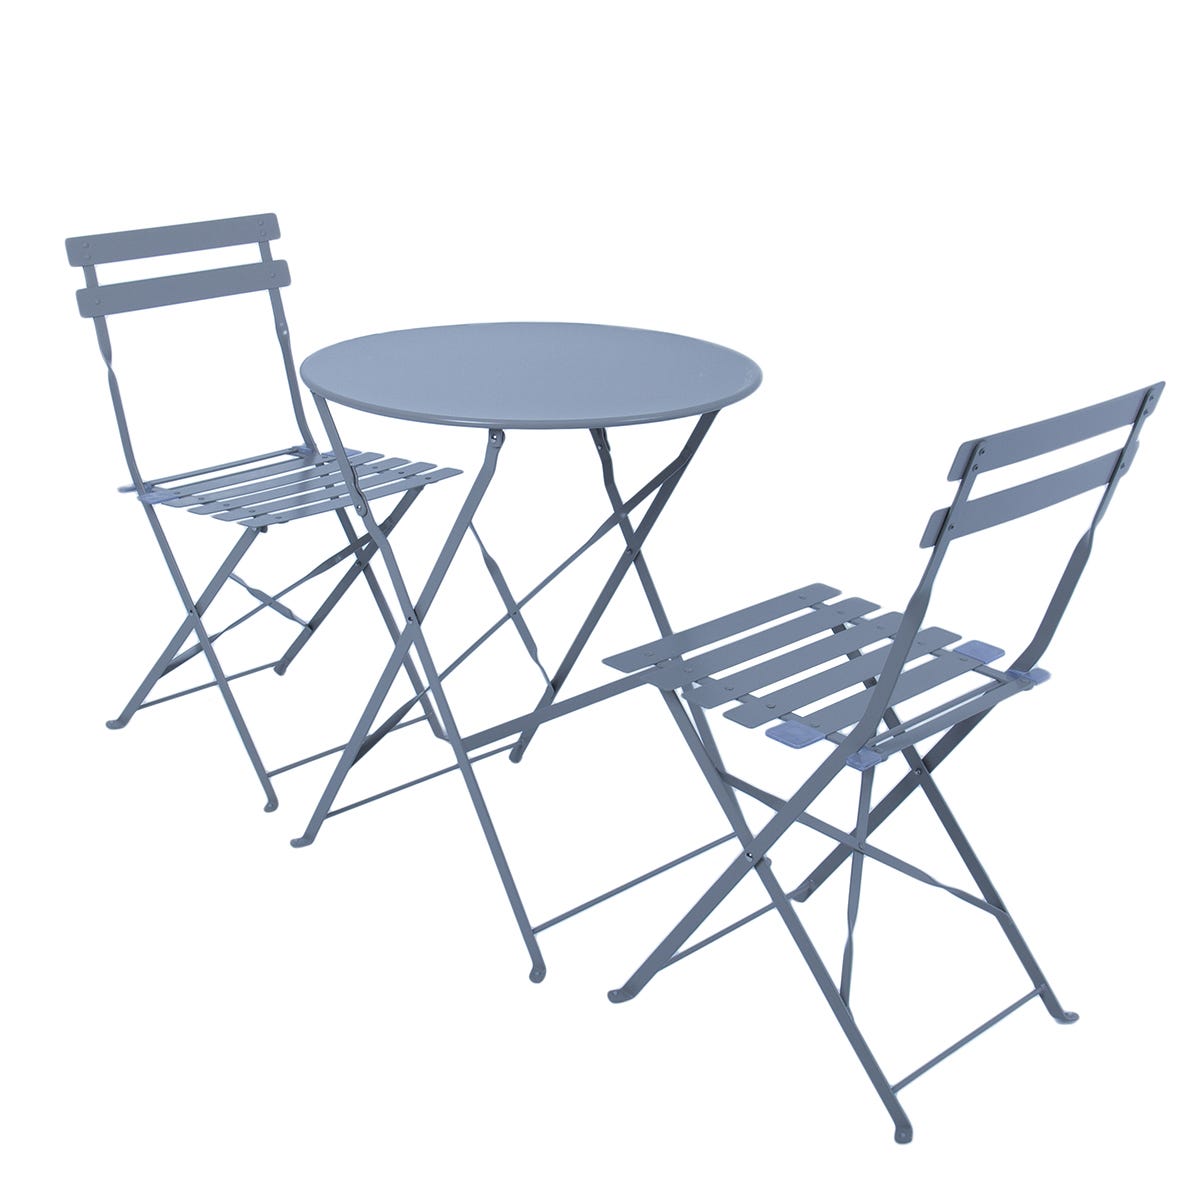 Charles Bentley 3 Piece Metal Bistro Set Garden Patio Table 2 Chairs 6 Colours Navy